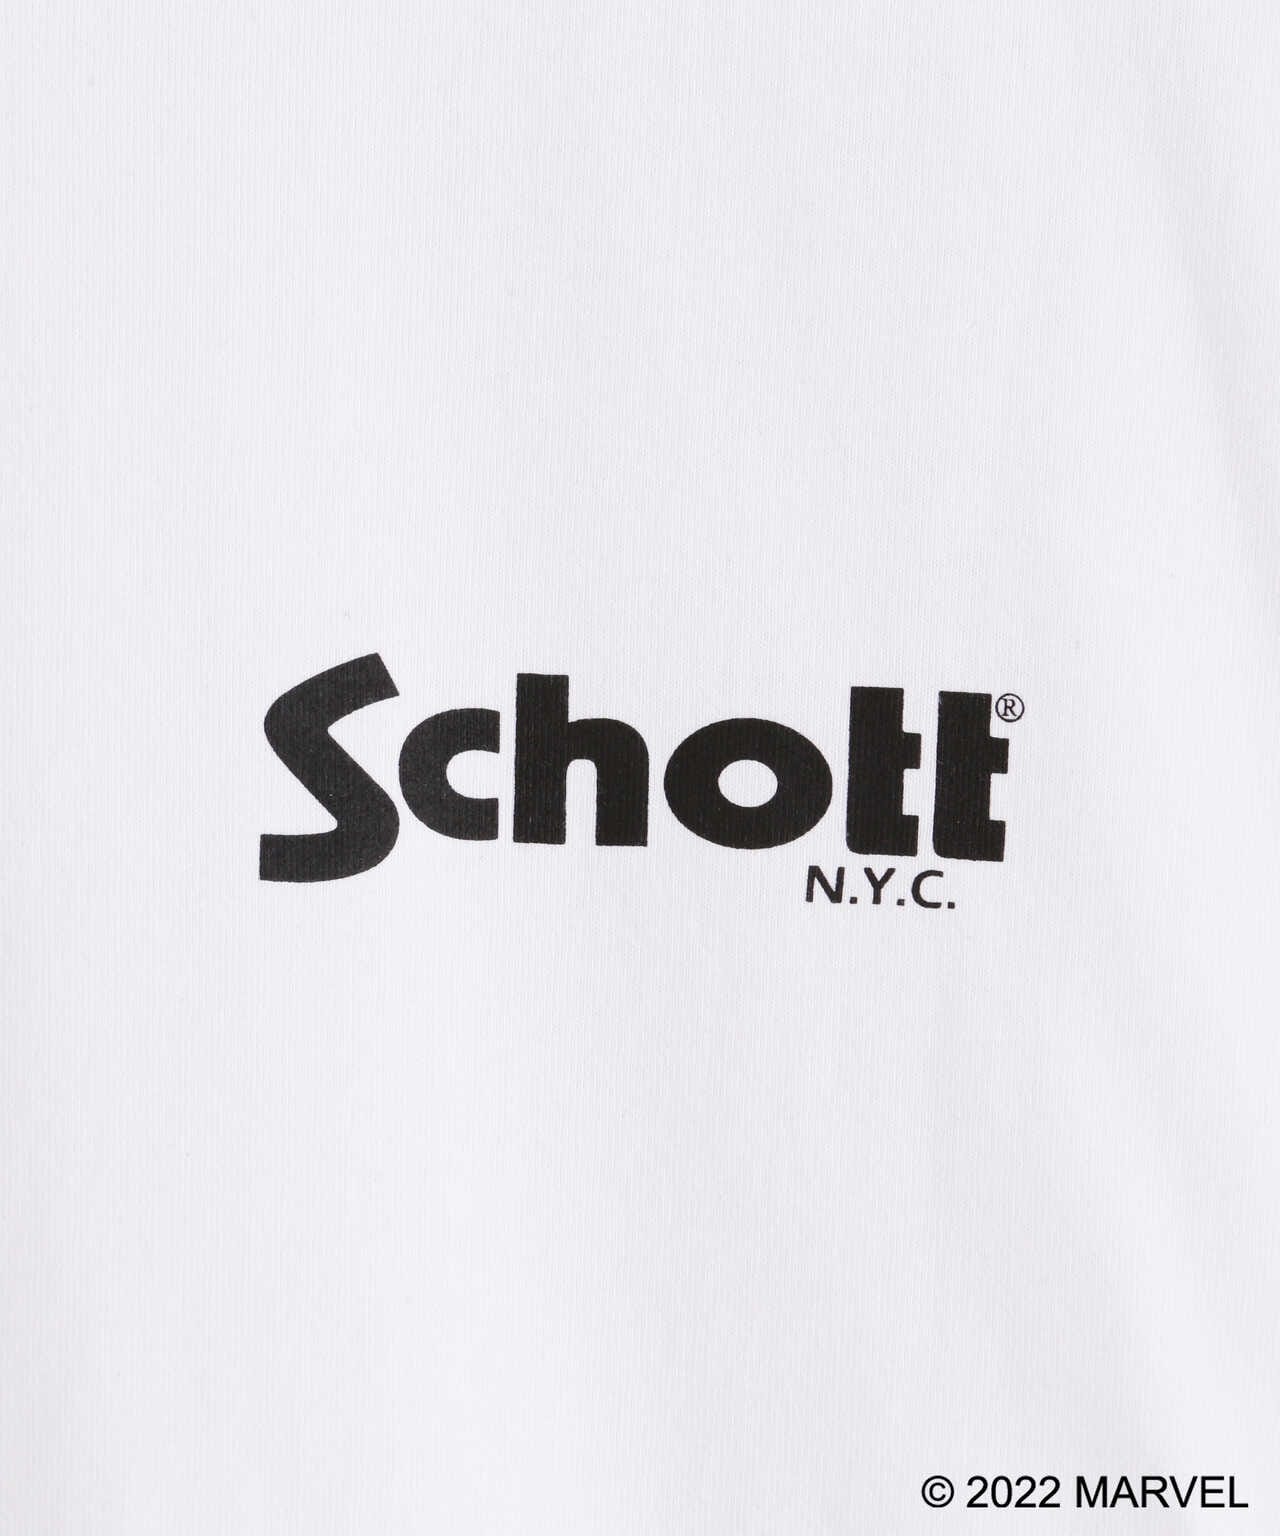 S/S T-SHIRT GHOST RIDER/ゴーストライダー Tシャツ | Schott